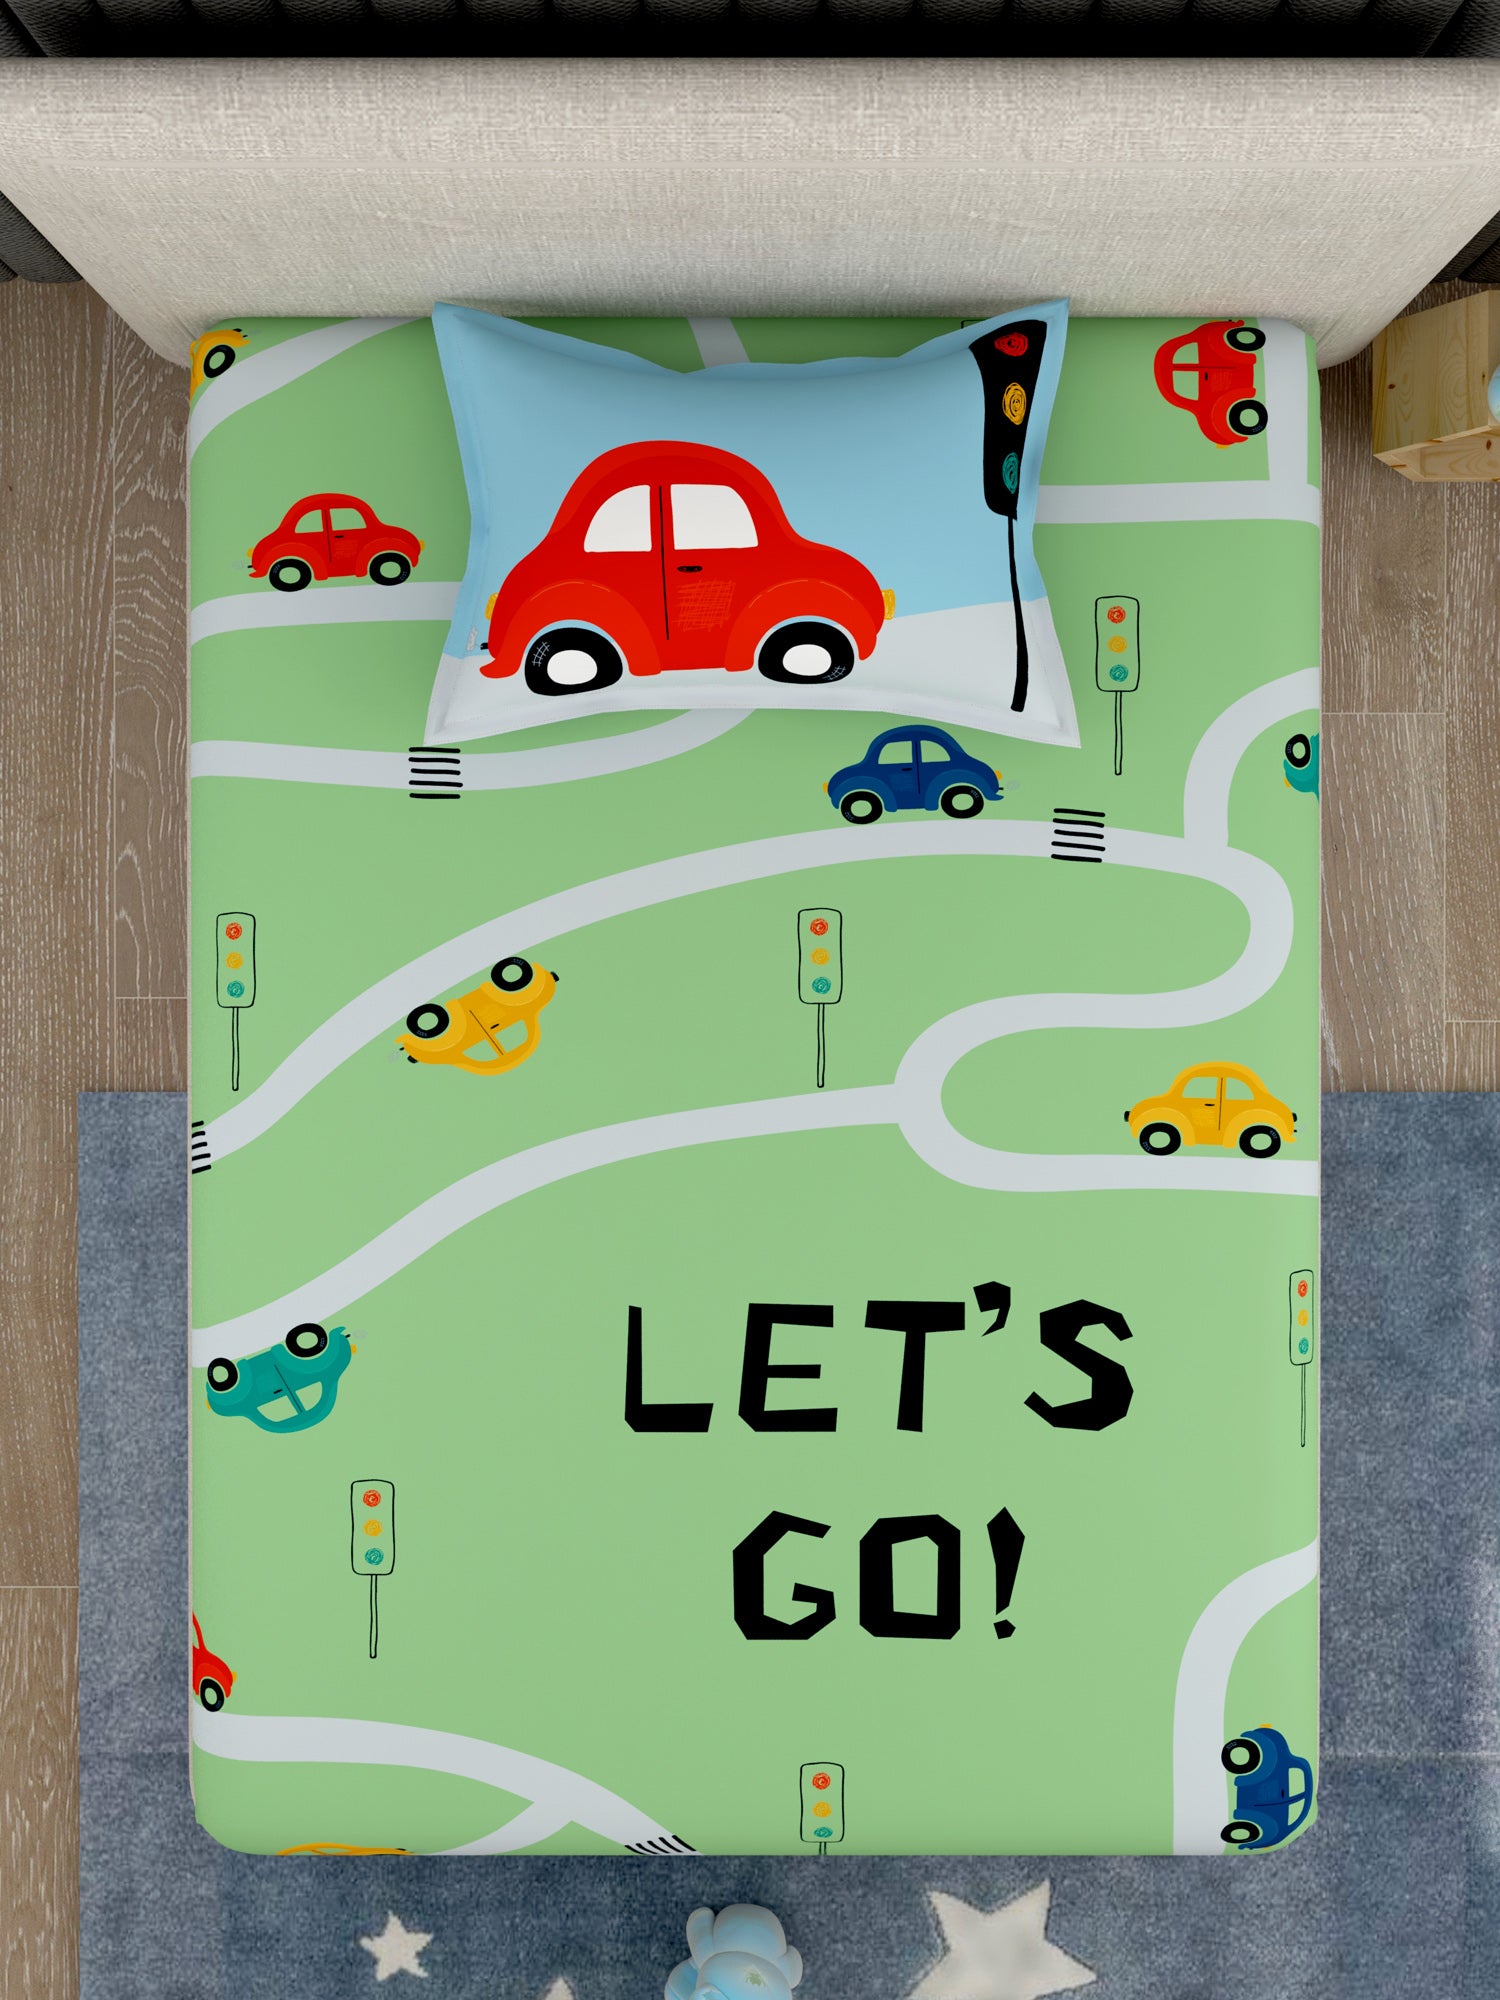 EverHome Green Conversational Print 100%Cotton Single Bedsheet with 1 Pillow Cover (150X224 cm)